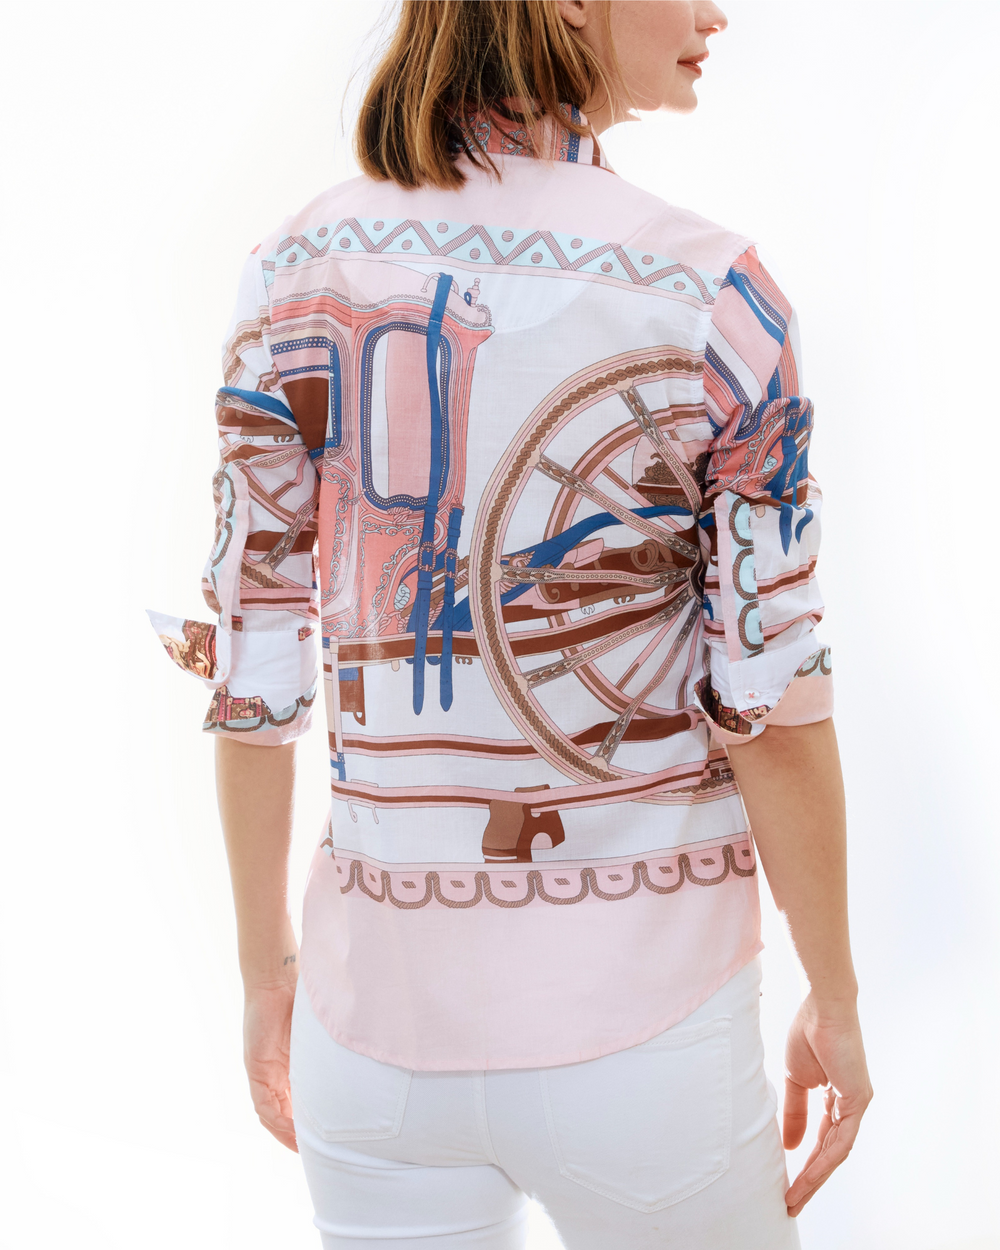 Dizzy-Lizzie Rome Shirt With 3/4 Sleeves - Fuchsia Wagon Wheel